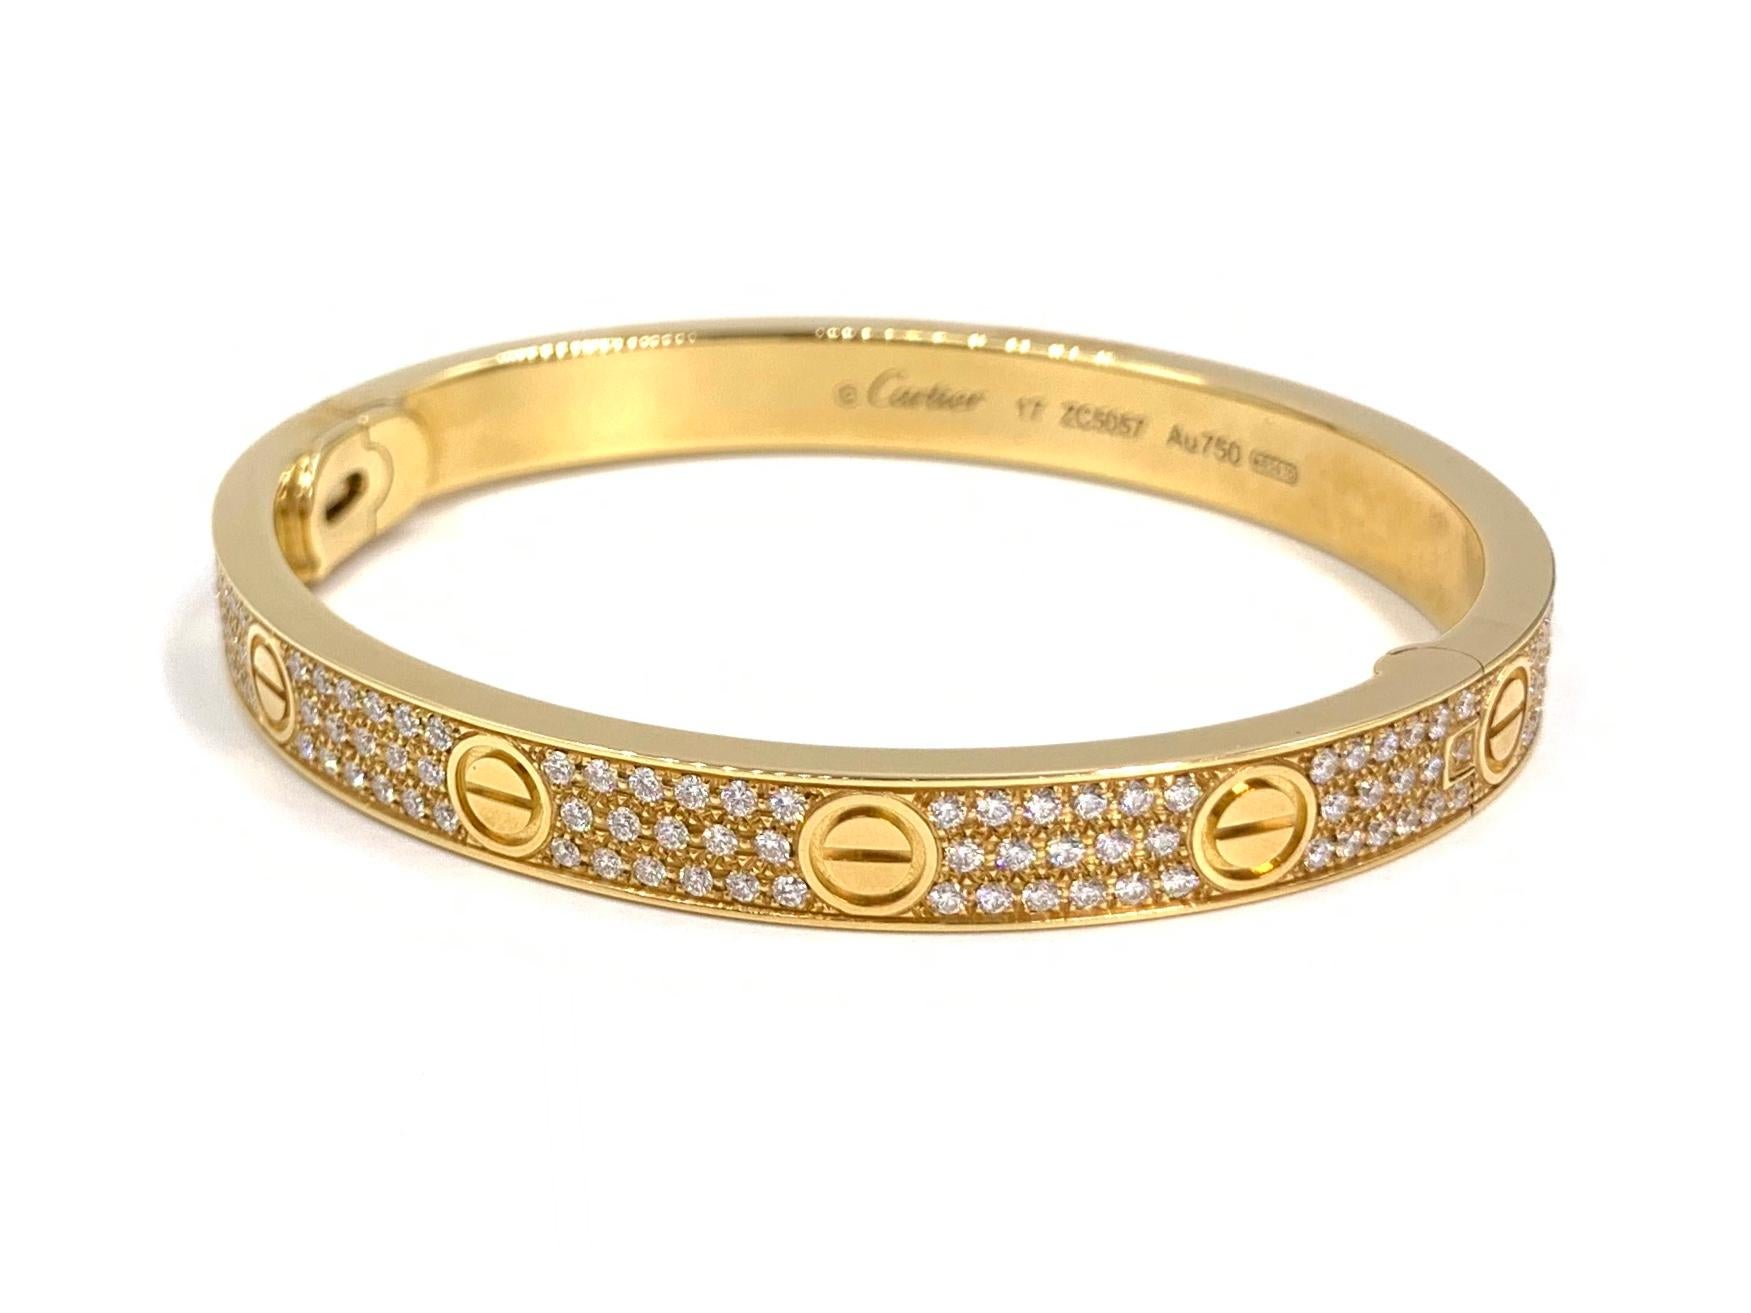 Contemporary 18 Karat Yellow Gold Cartier Love Bracelet with Pave Diamonds